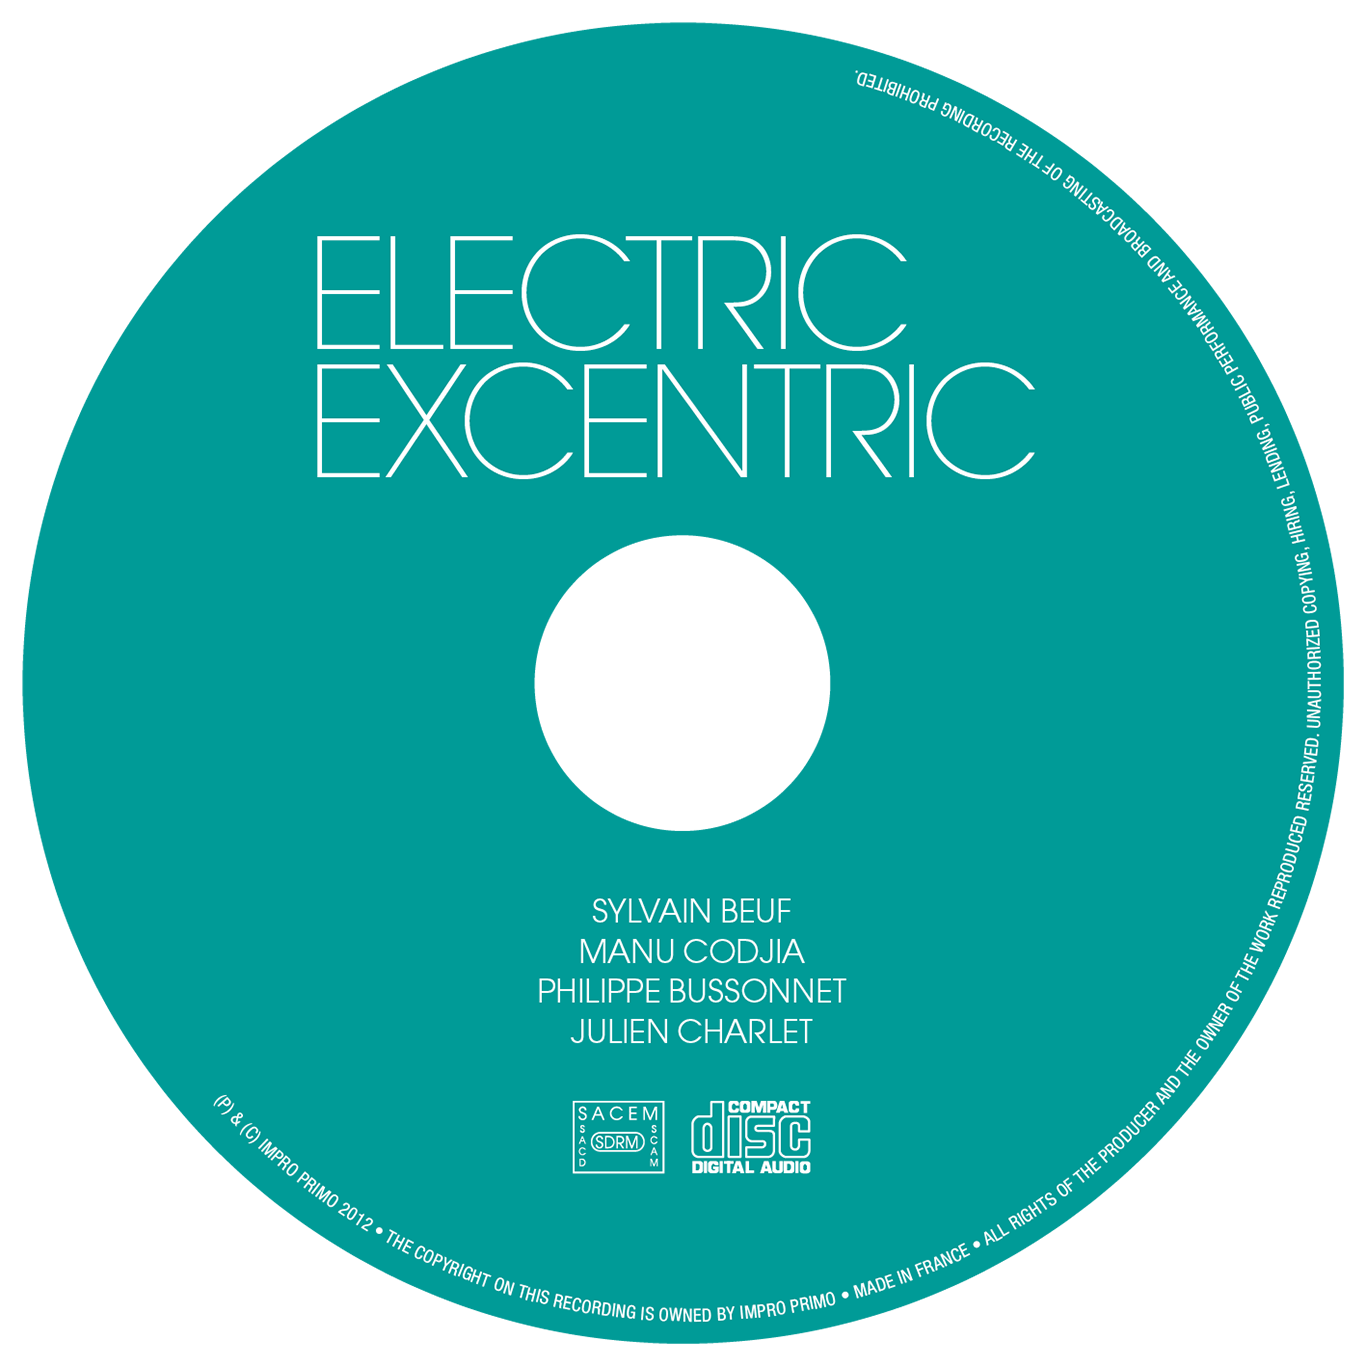 ElectricExcentric-SylvainBeuf-Img4